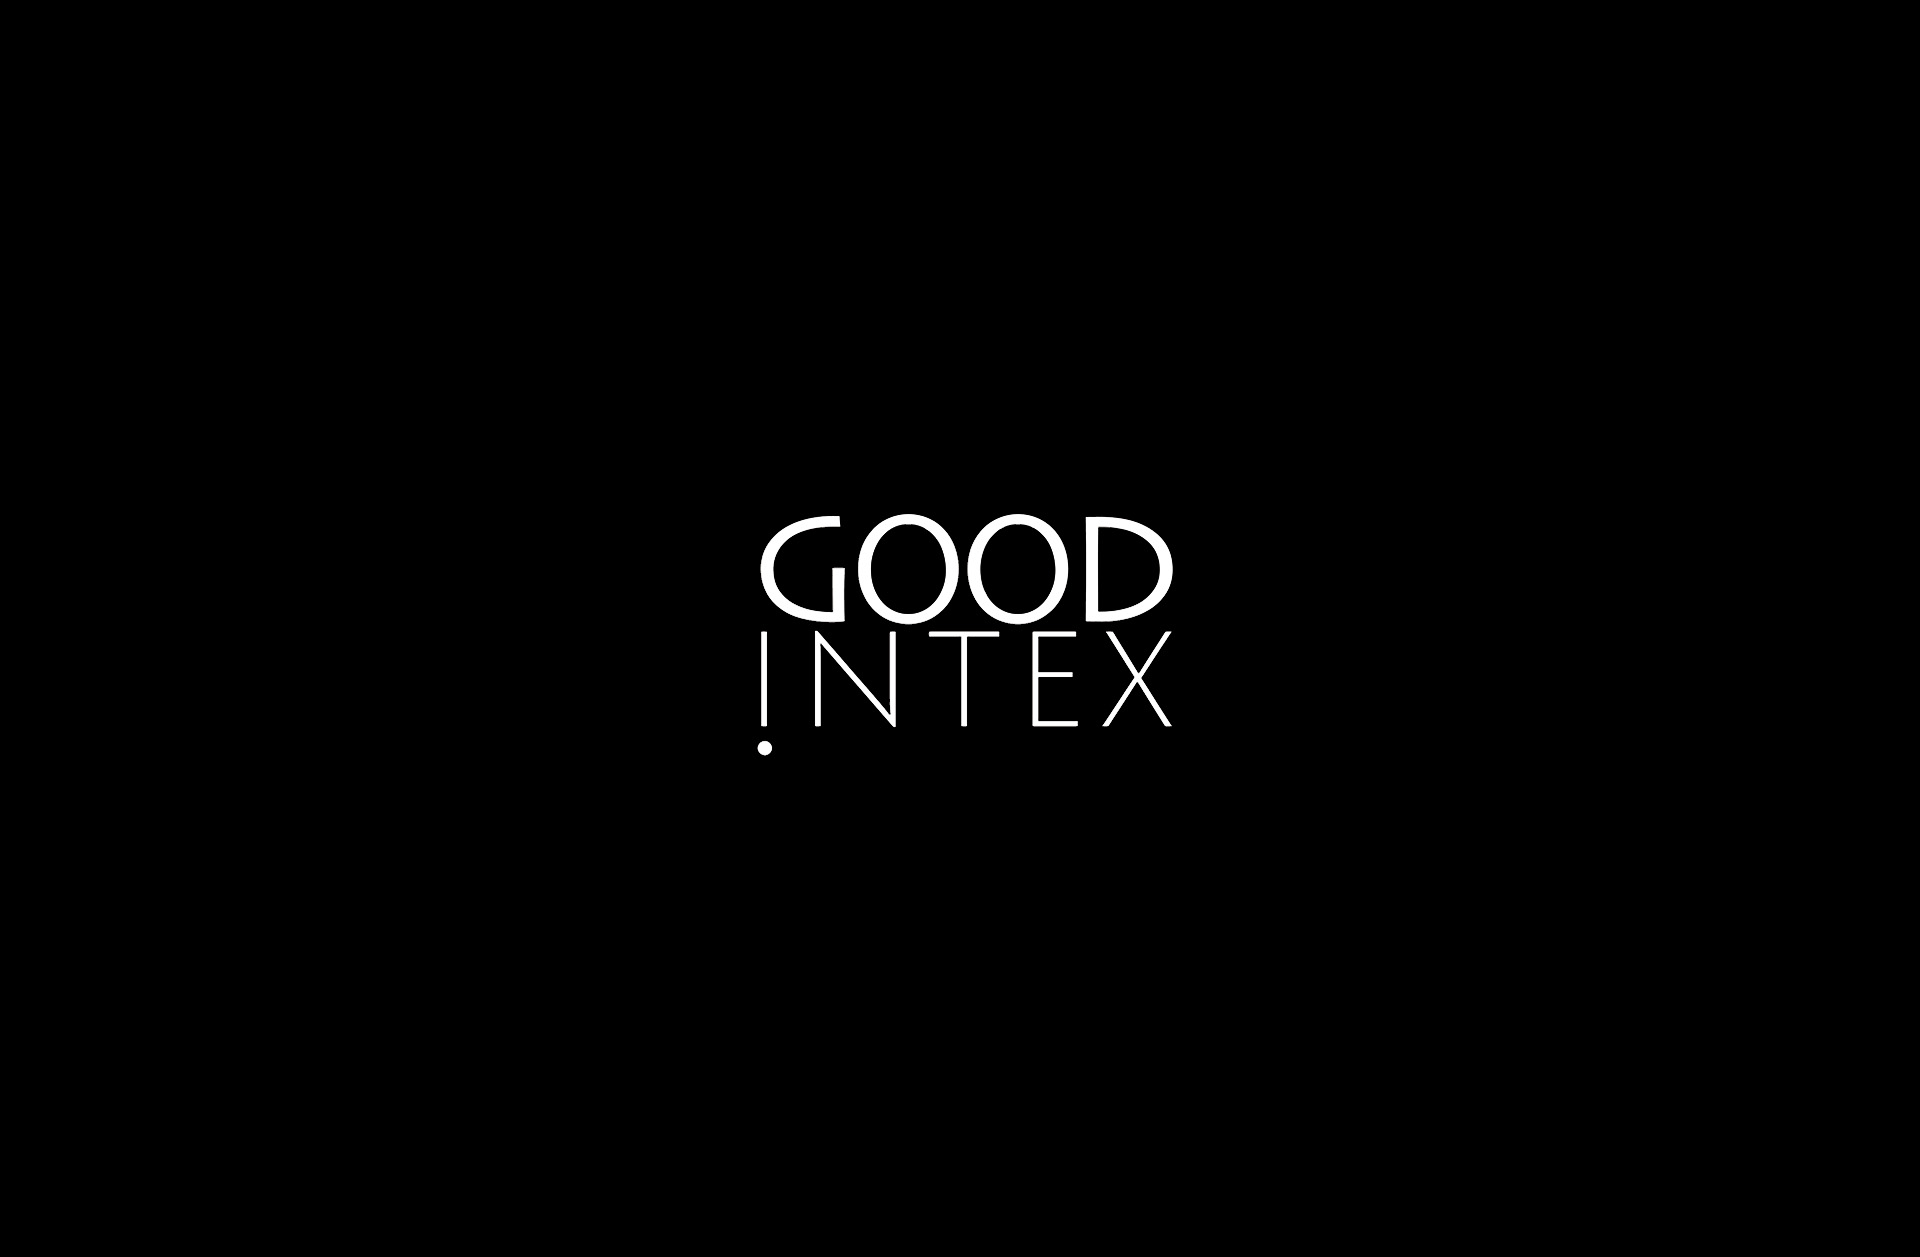 GOOD INTEX